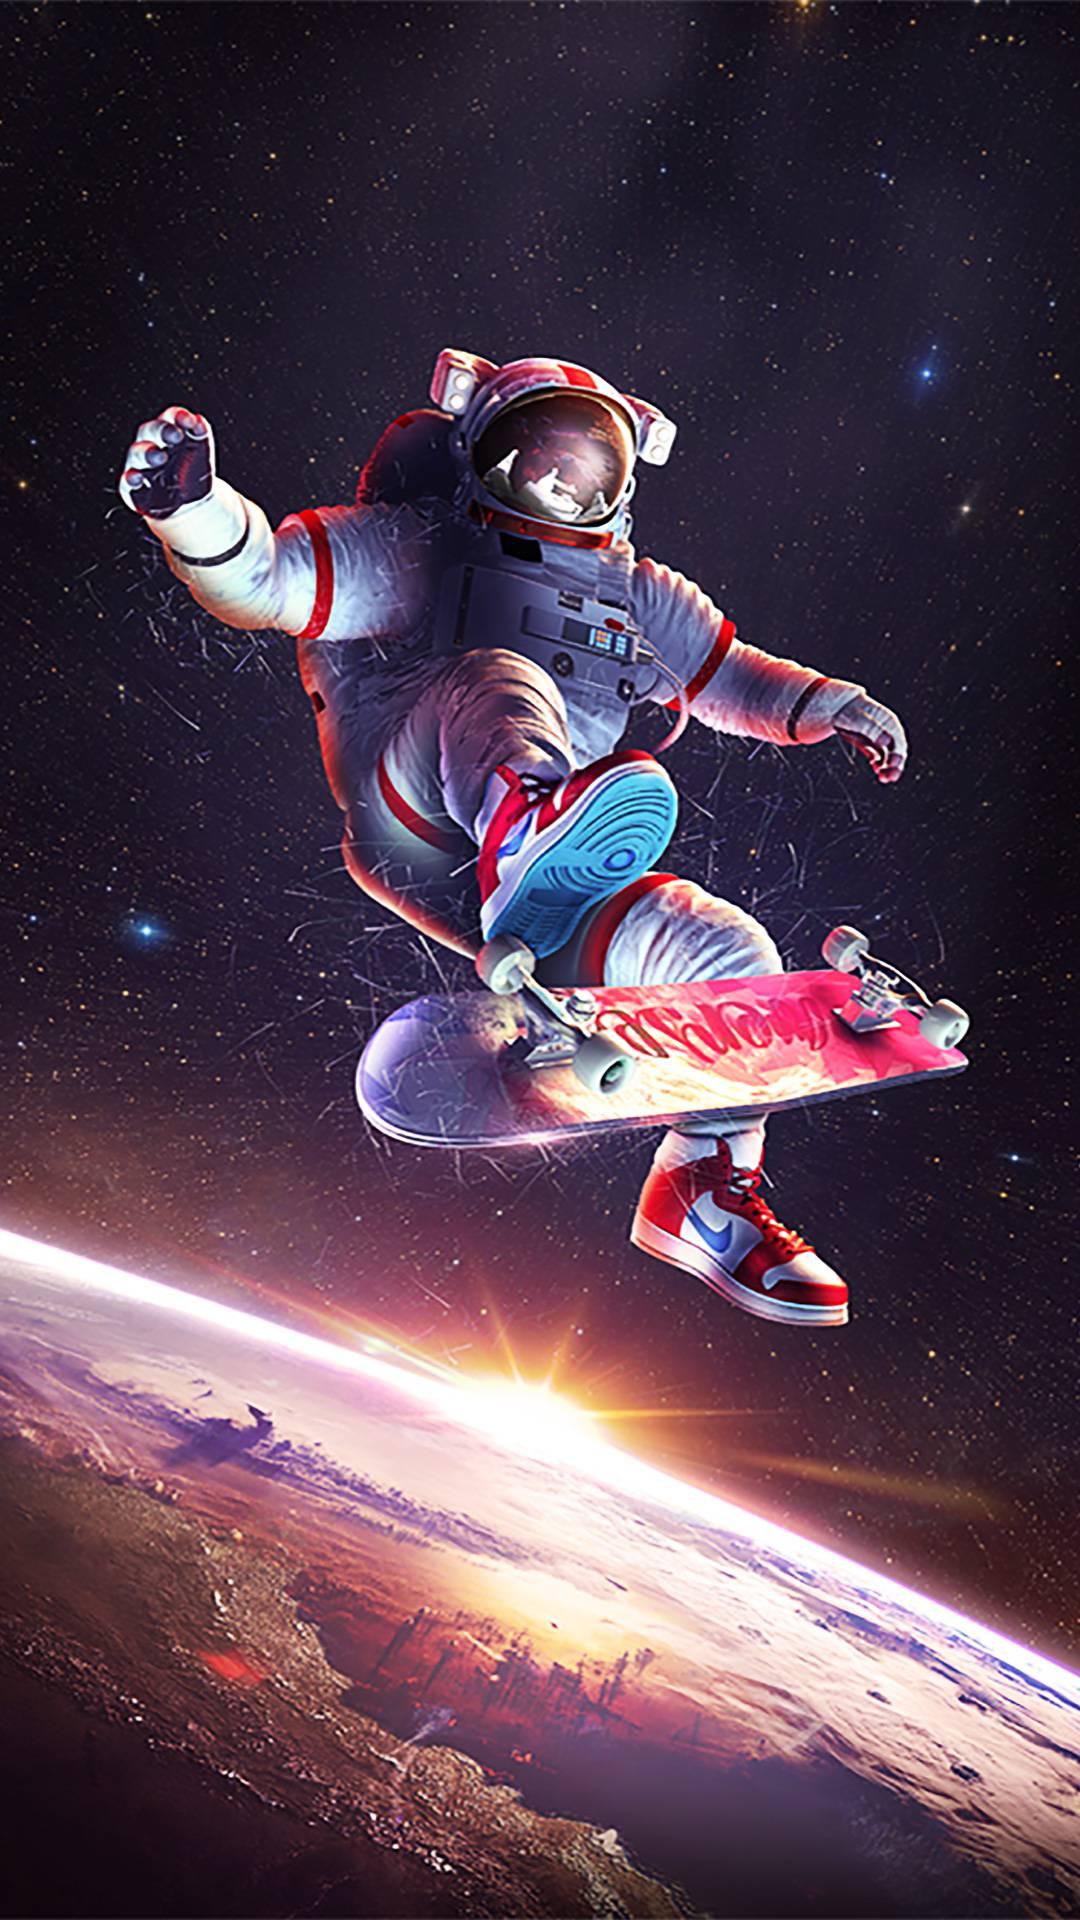 1080 x 1920 · jpeg - Skateboarding Astronaut iPhone Wallpaper - iPhone Wallpapers : iPhone ...